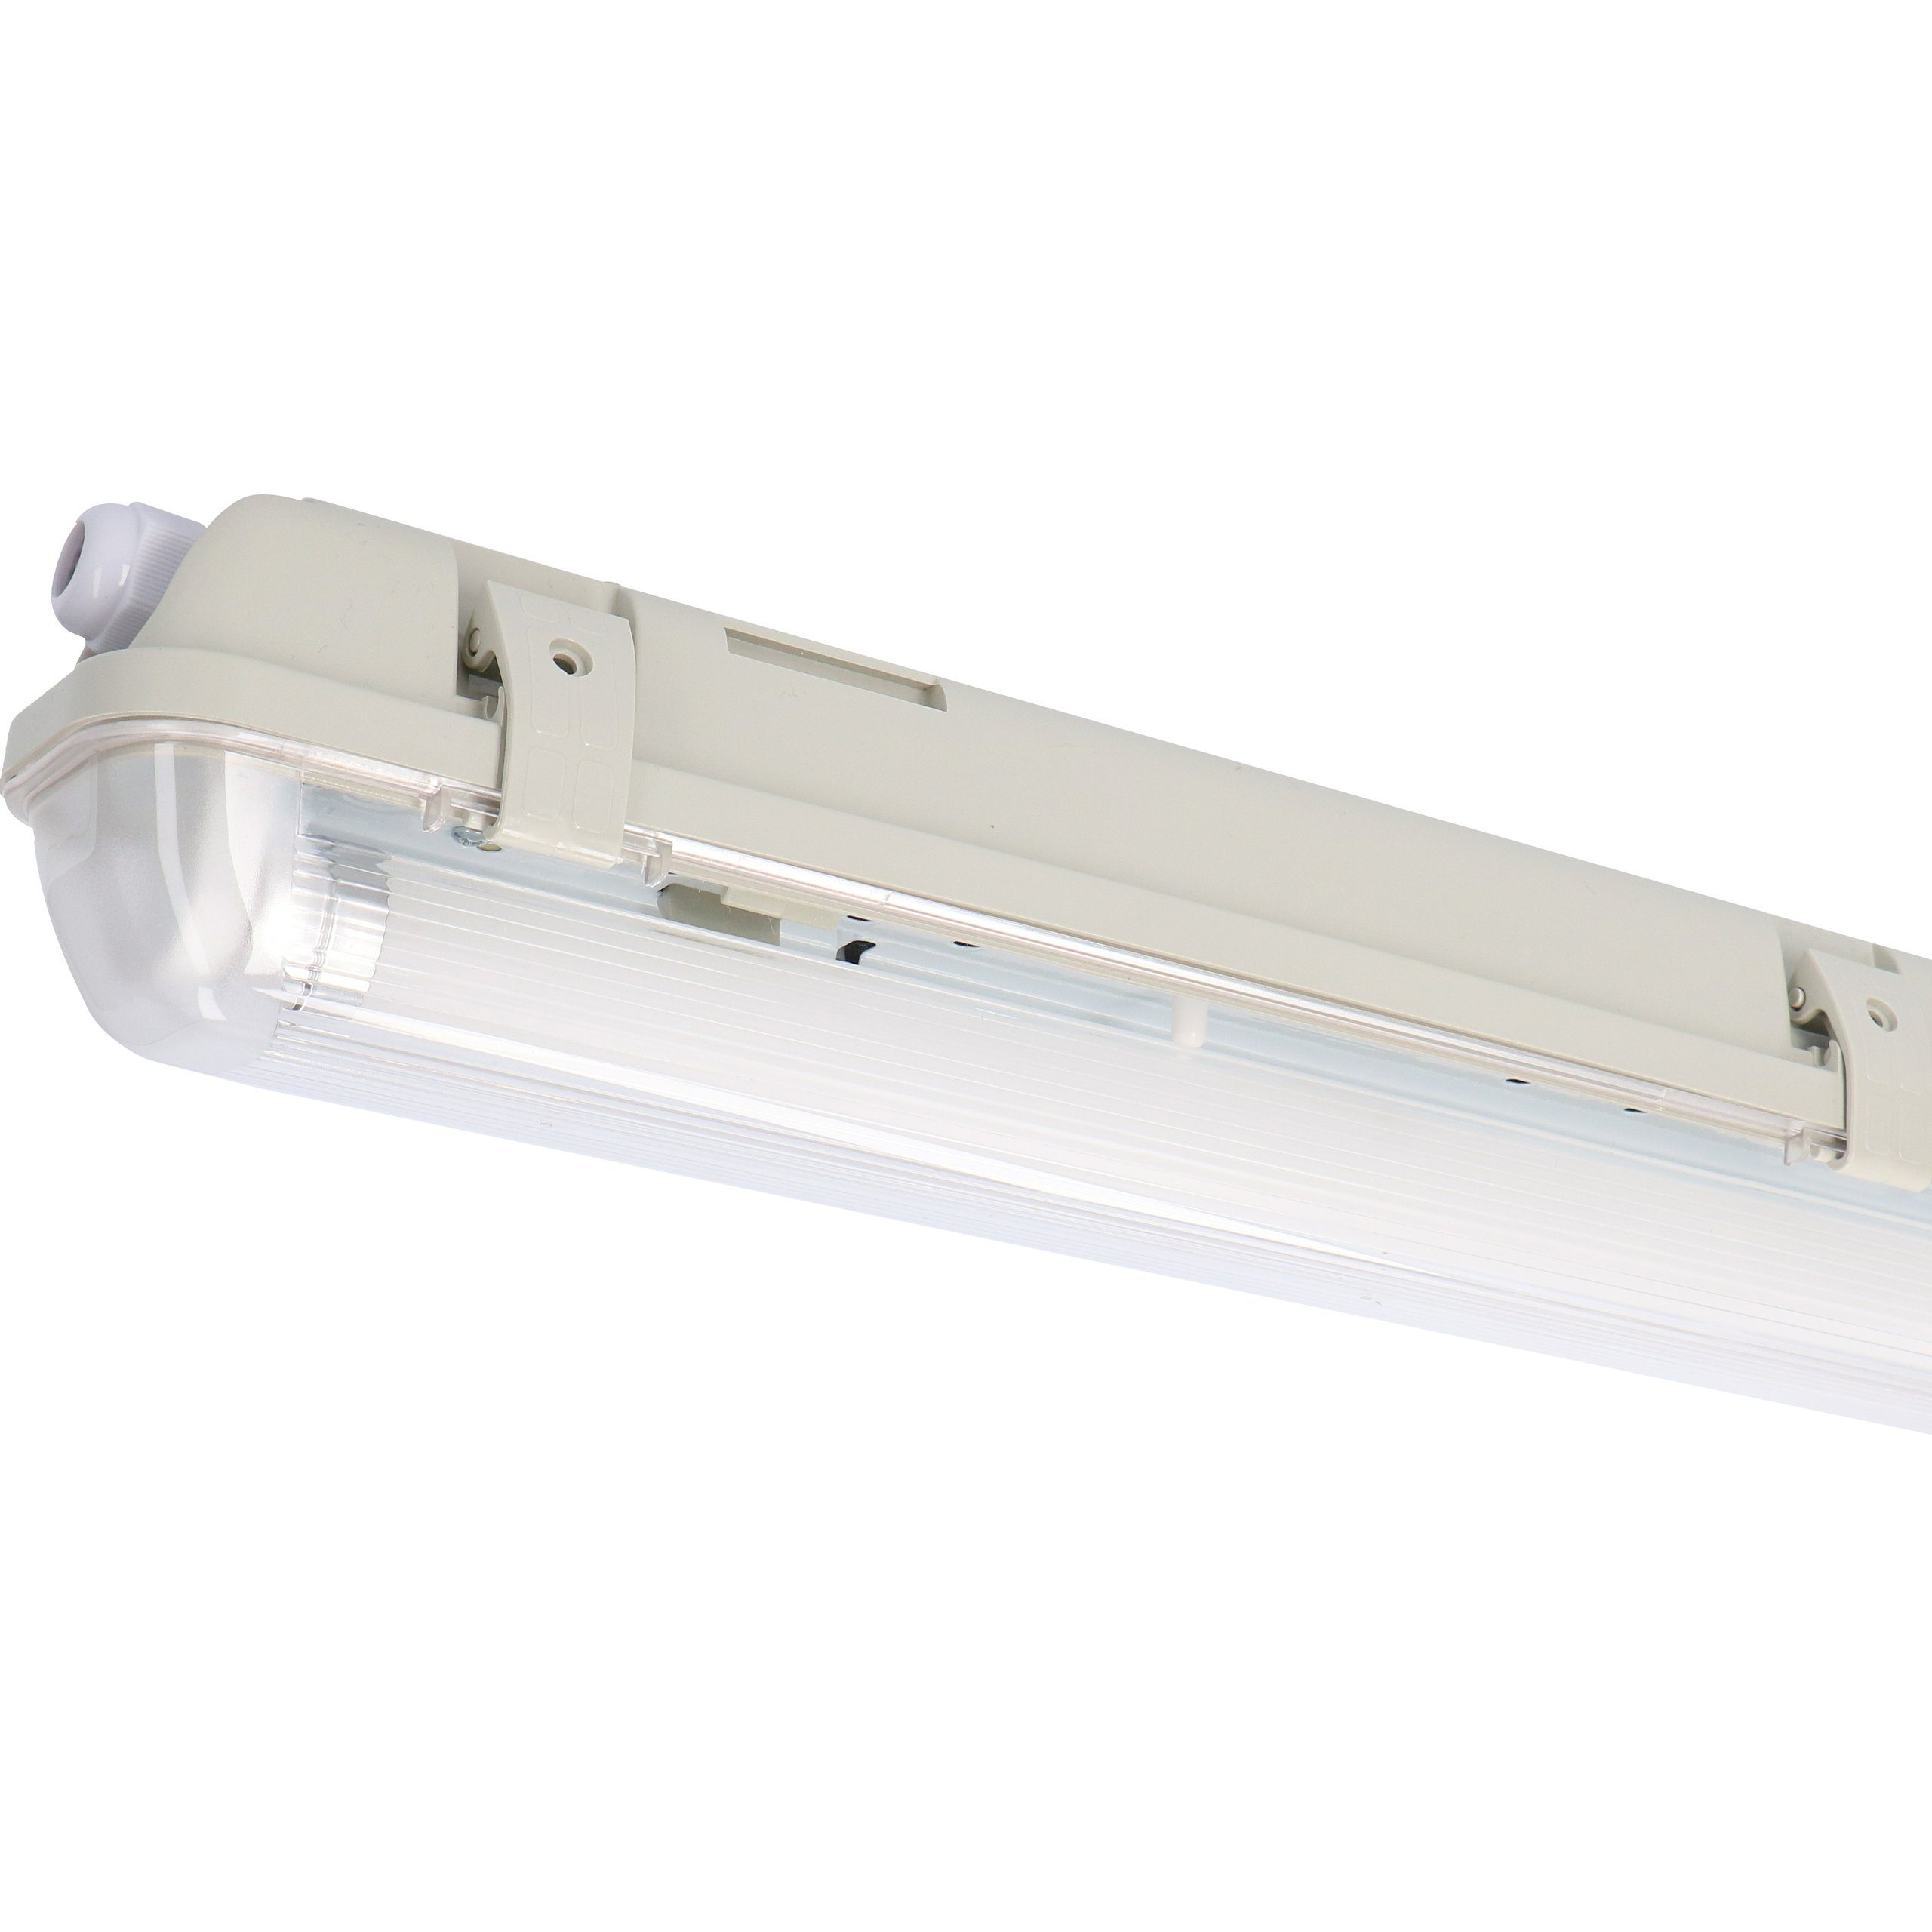 LED's light LED Deckenleuchte 2400200_01 Feuchtraumleuchte, LED, mit LED-Röhre 60 cm 7,5W neutralweiß IP65 G13